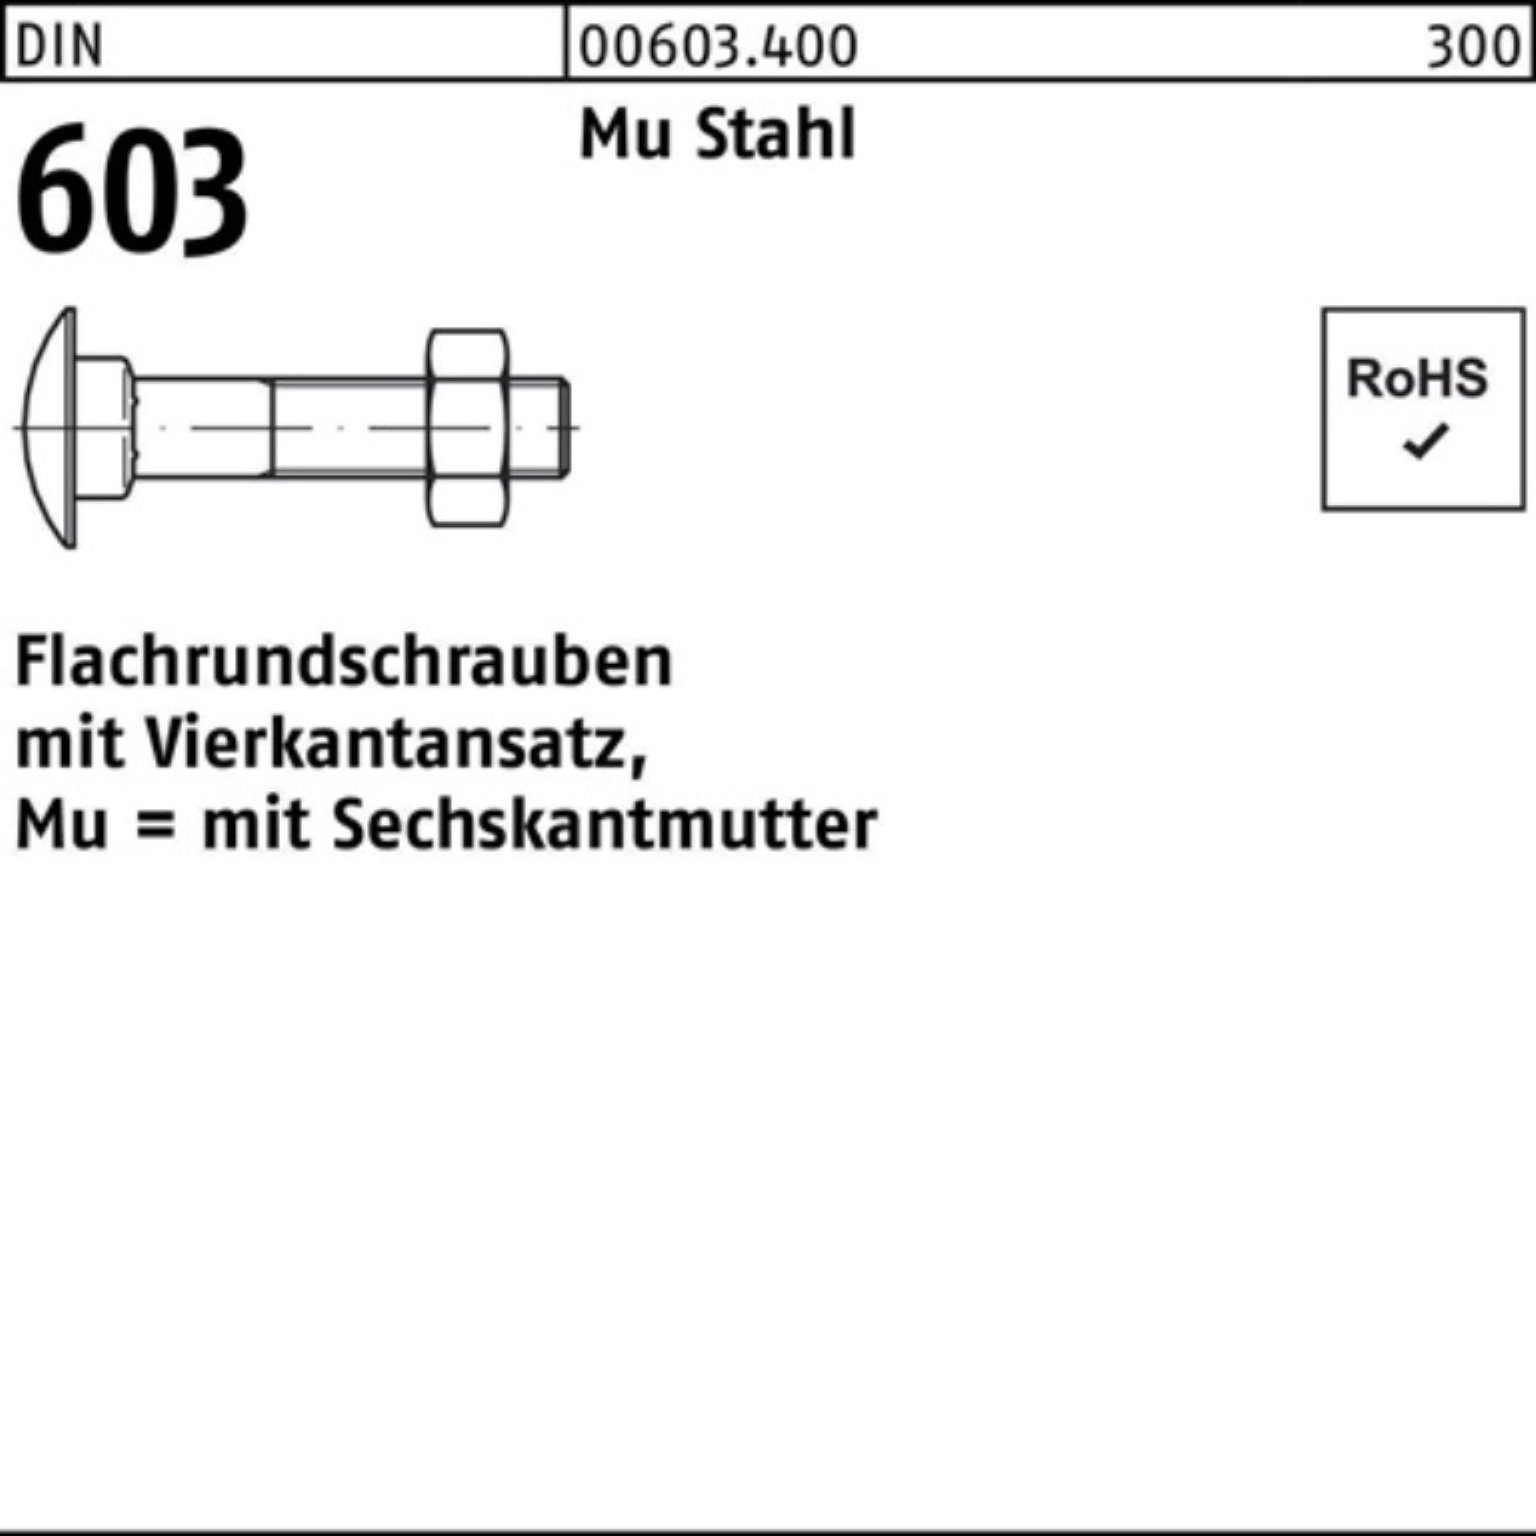 603 DIN Reyher M8x120 Pack Vierkantansatz/6-ktmutter Flachrundschraube 100er Schraube